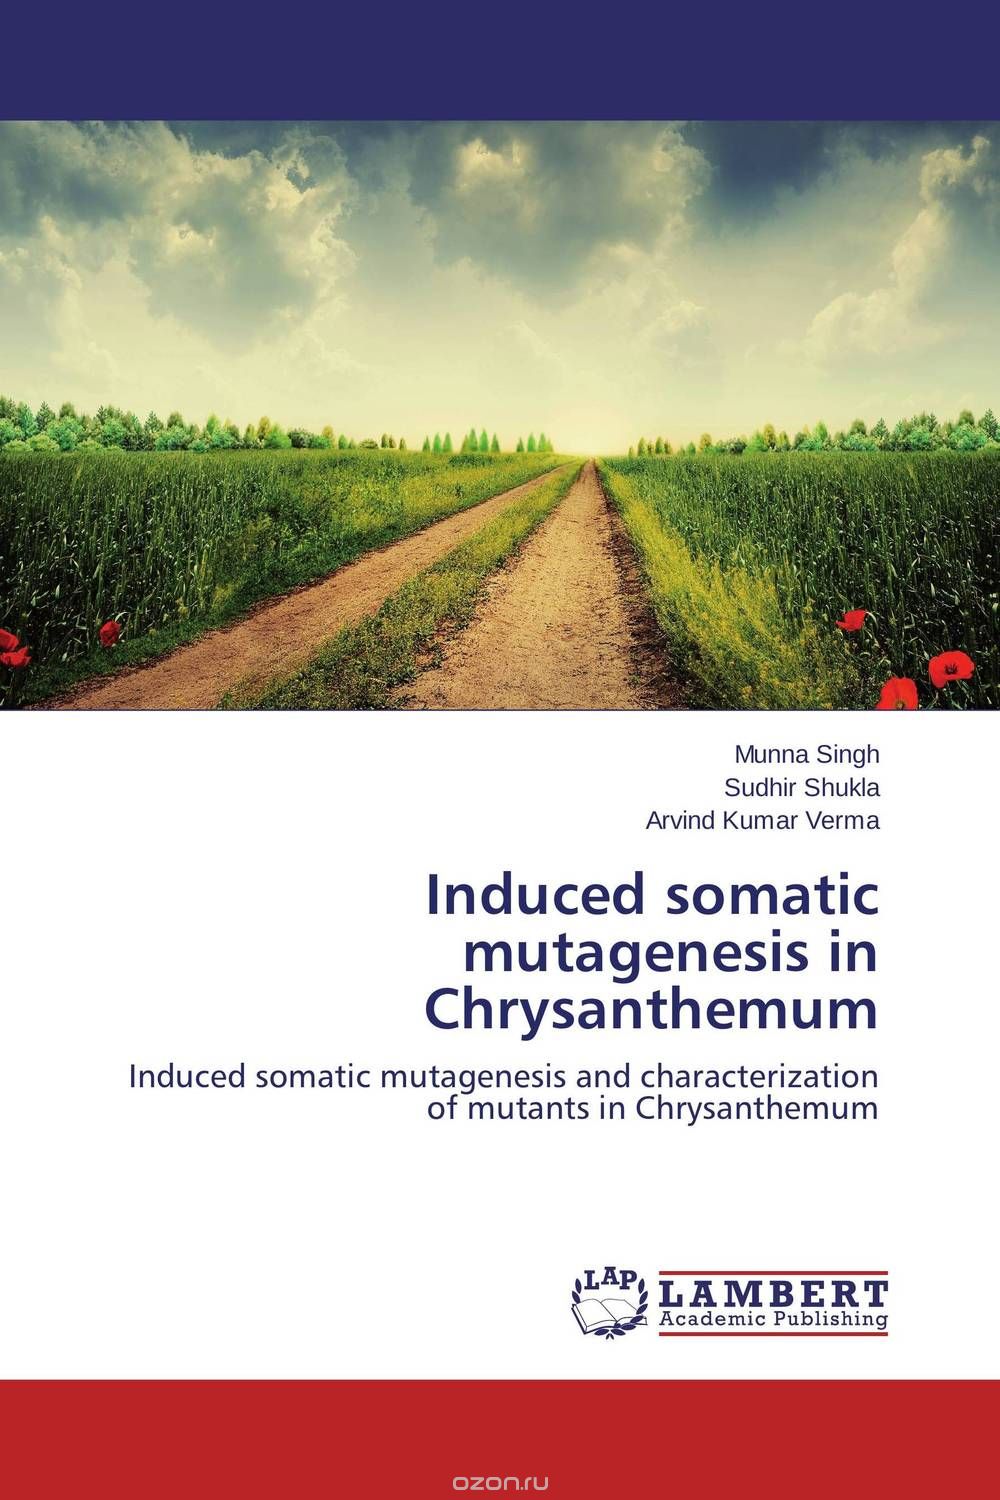 Скачать книгу "Induced somatic mutagenesis in Chrysanthemum"